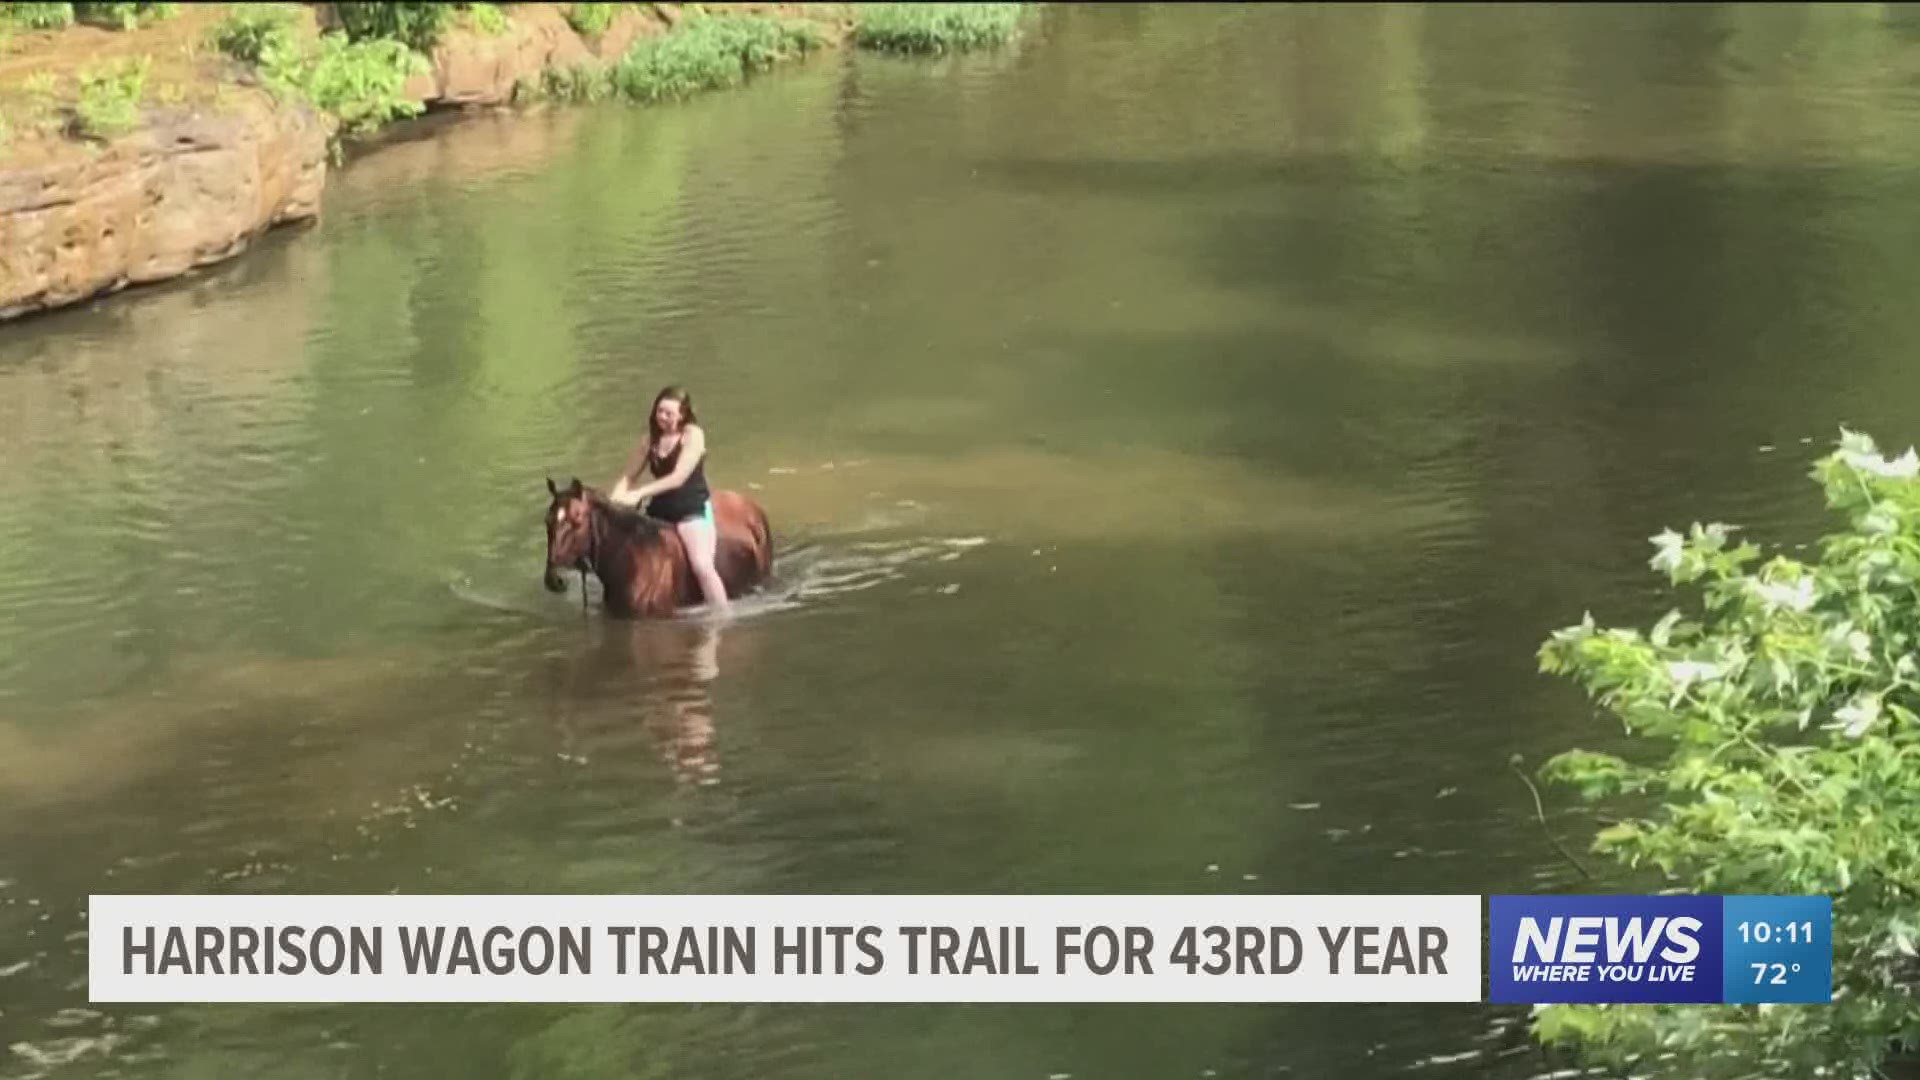 Harrison Wagon Train hits trail for 43rd year.